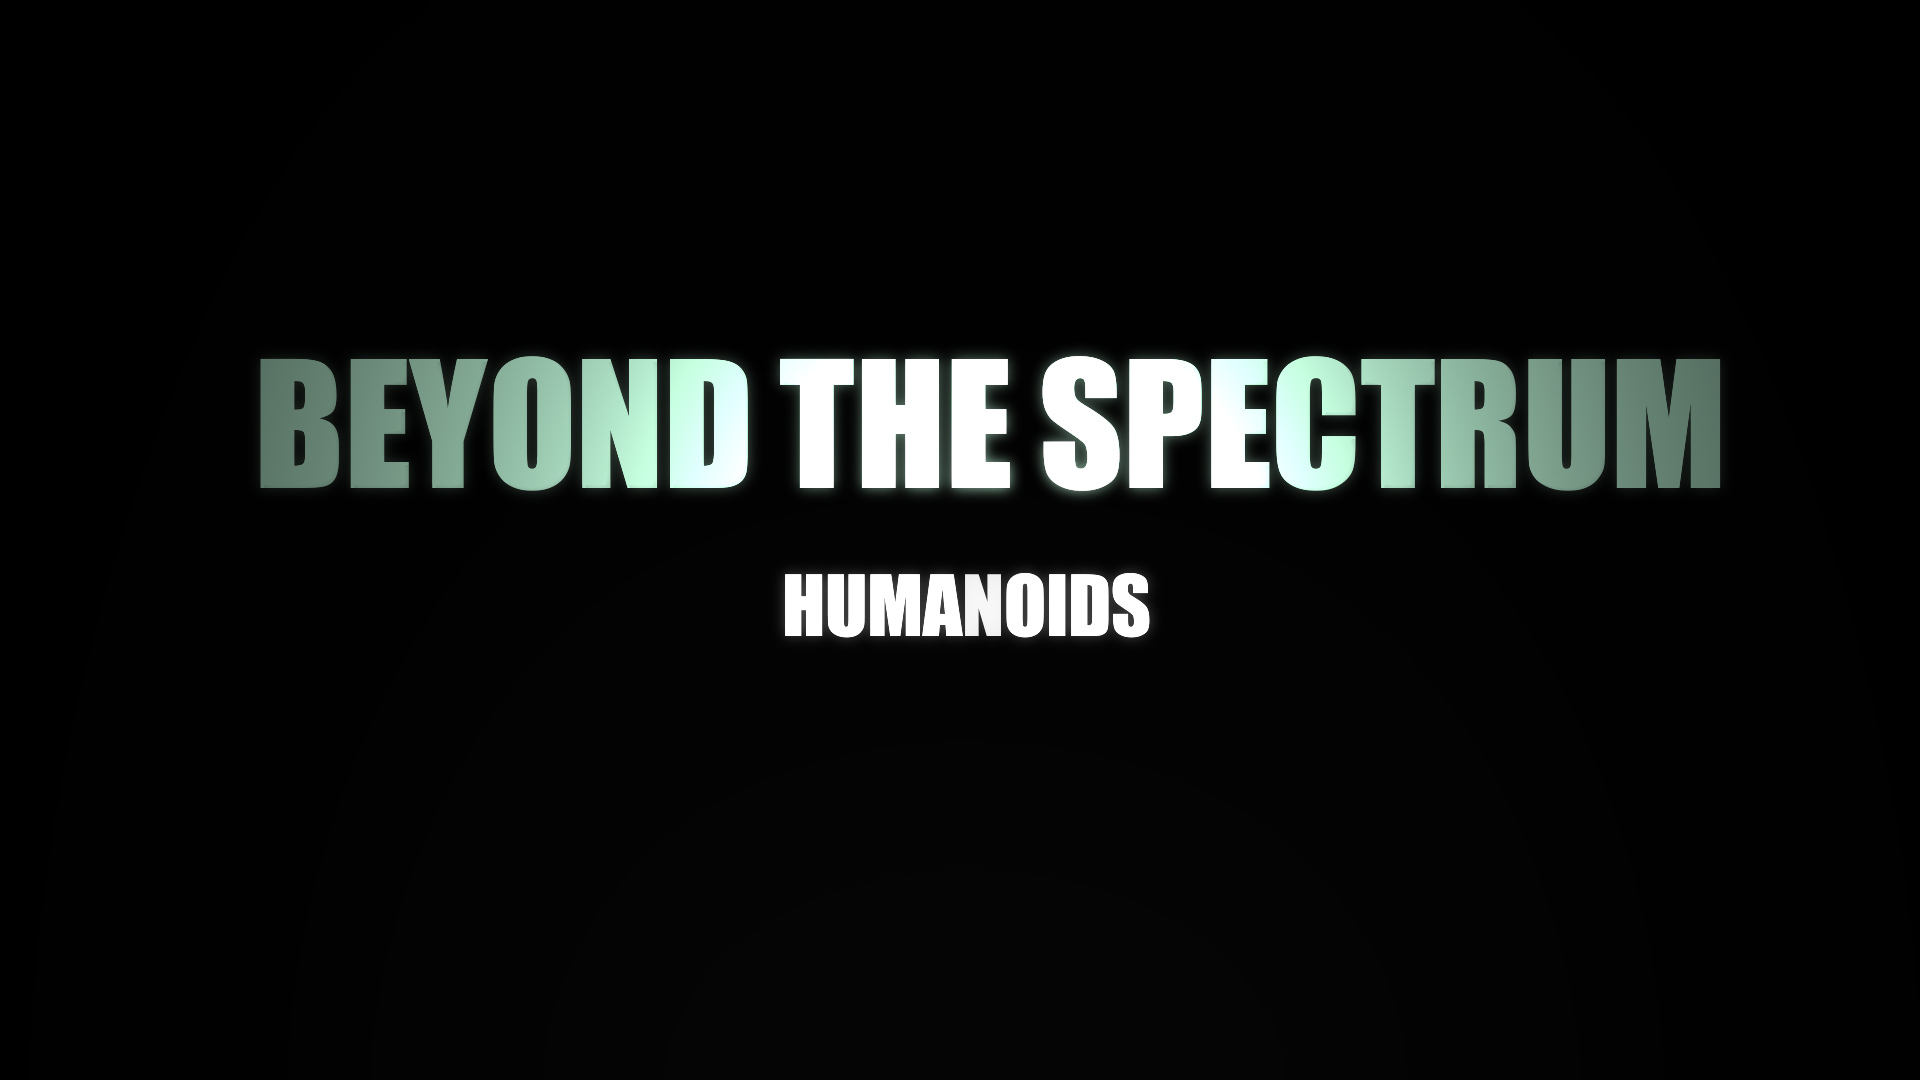 Beyond the Spectrum - Humanoids